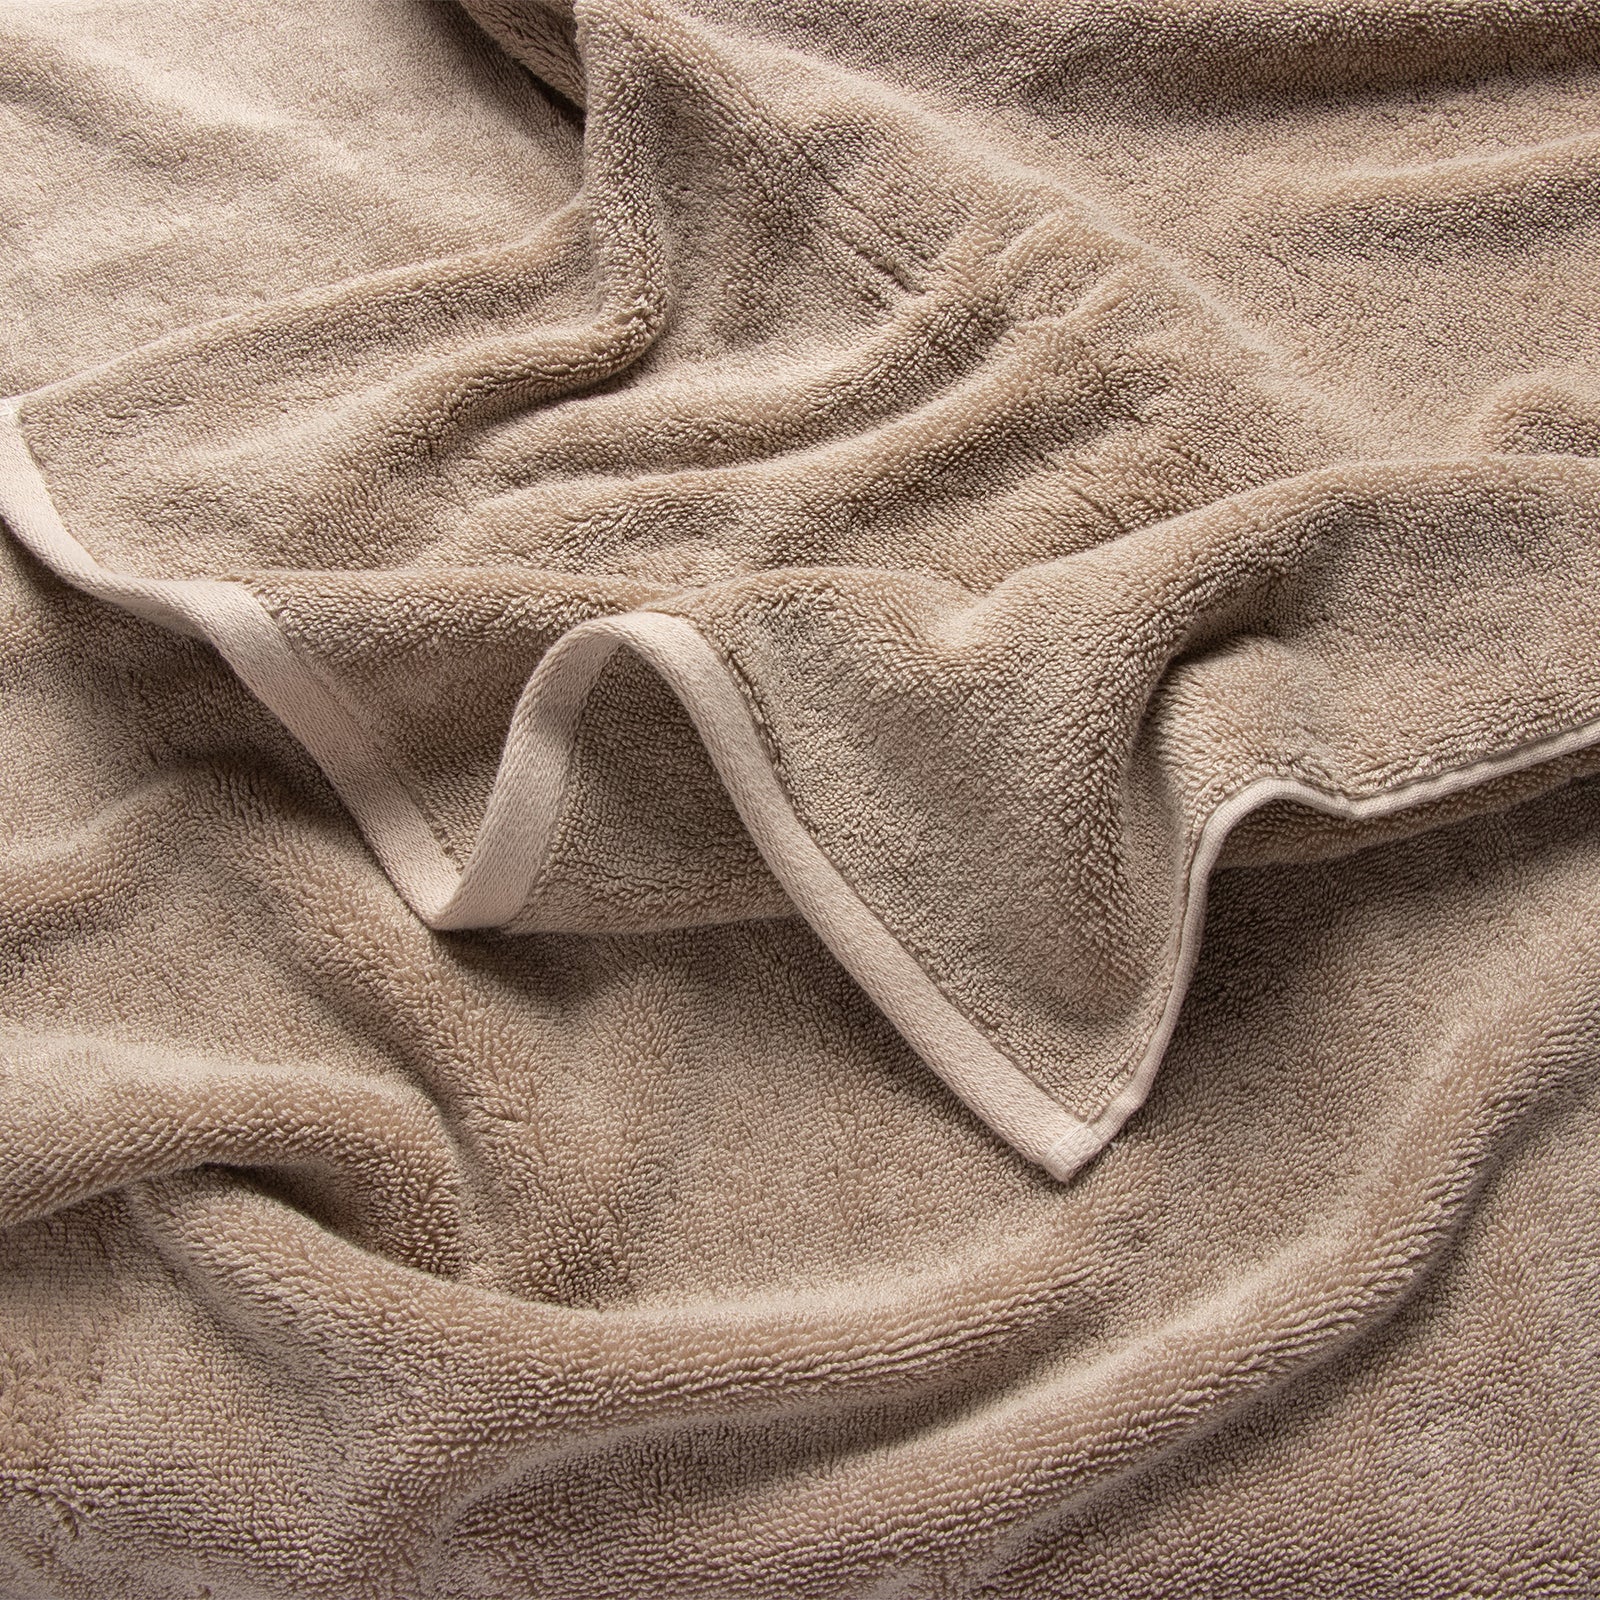 Premium Plush Bath Towel in the color Sand. Photo of Premium Plush Bath Towel taken as a close up only showing the Premium Plush Bath Towel's texture 